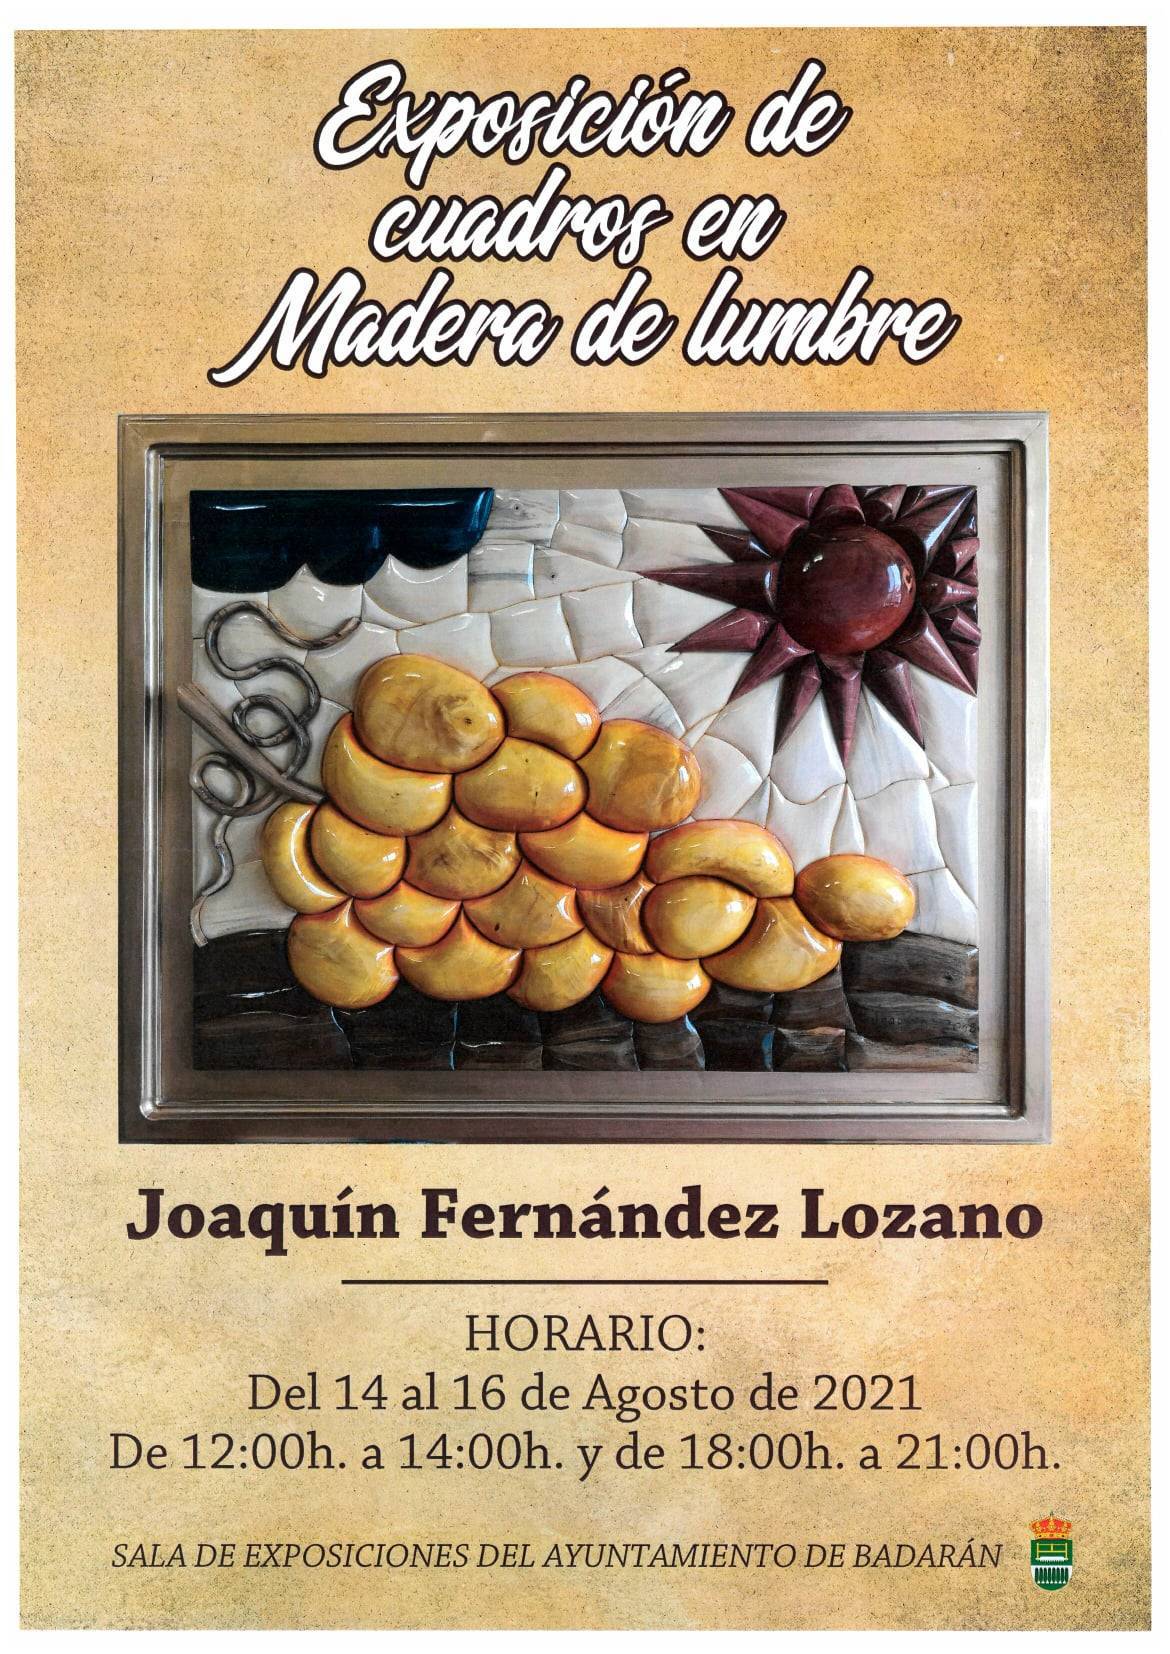 Exposición de cuadros en madera de lumbre (2021) - Badarán (La Rioja)